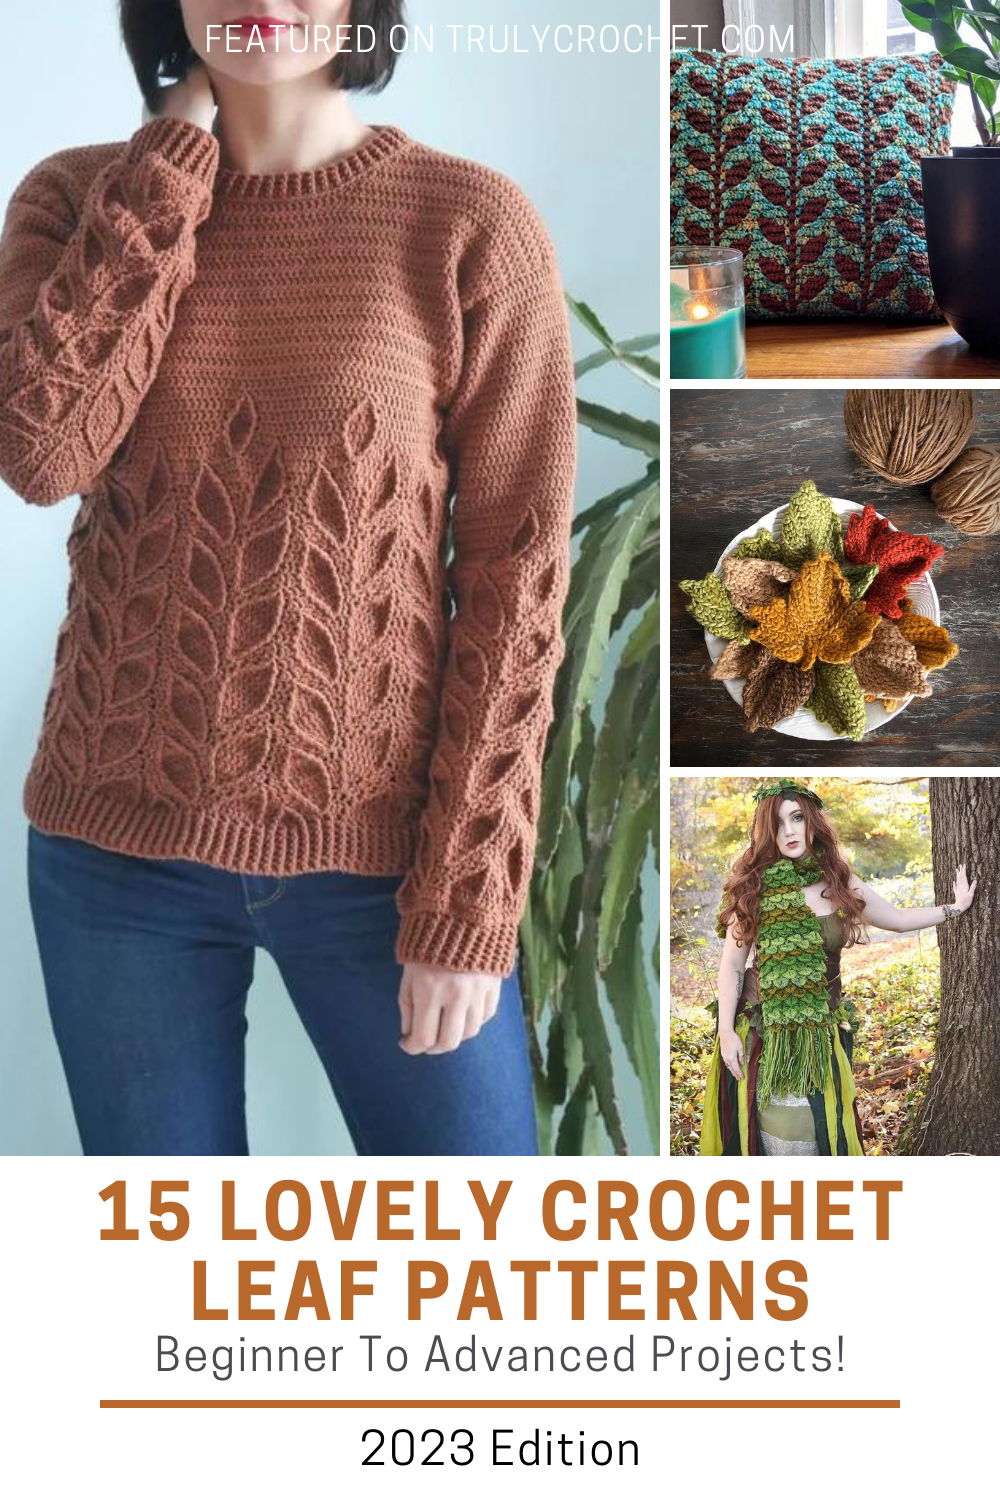 10 Tips for Crocheting with Black Yarn - Amanda Crochets